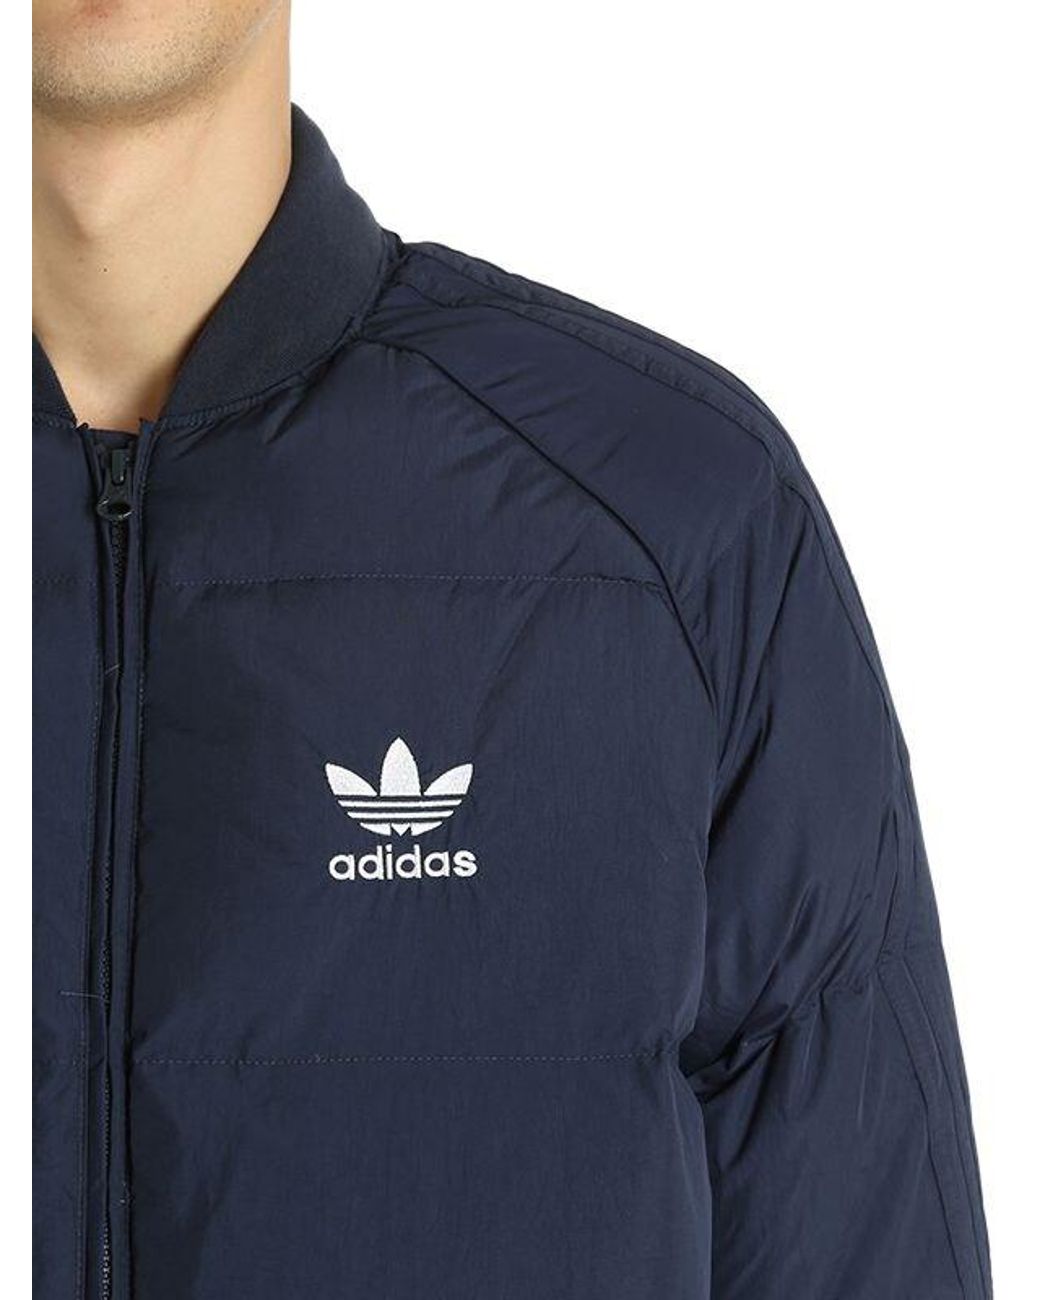 adidas Originals Sst Logo Printed Bomber Jacket in Navy (Blue) for Men -  Lyst